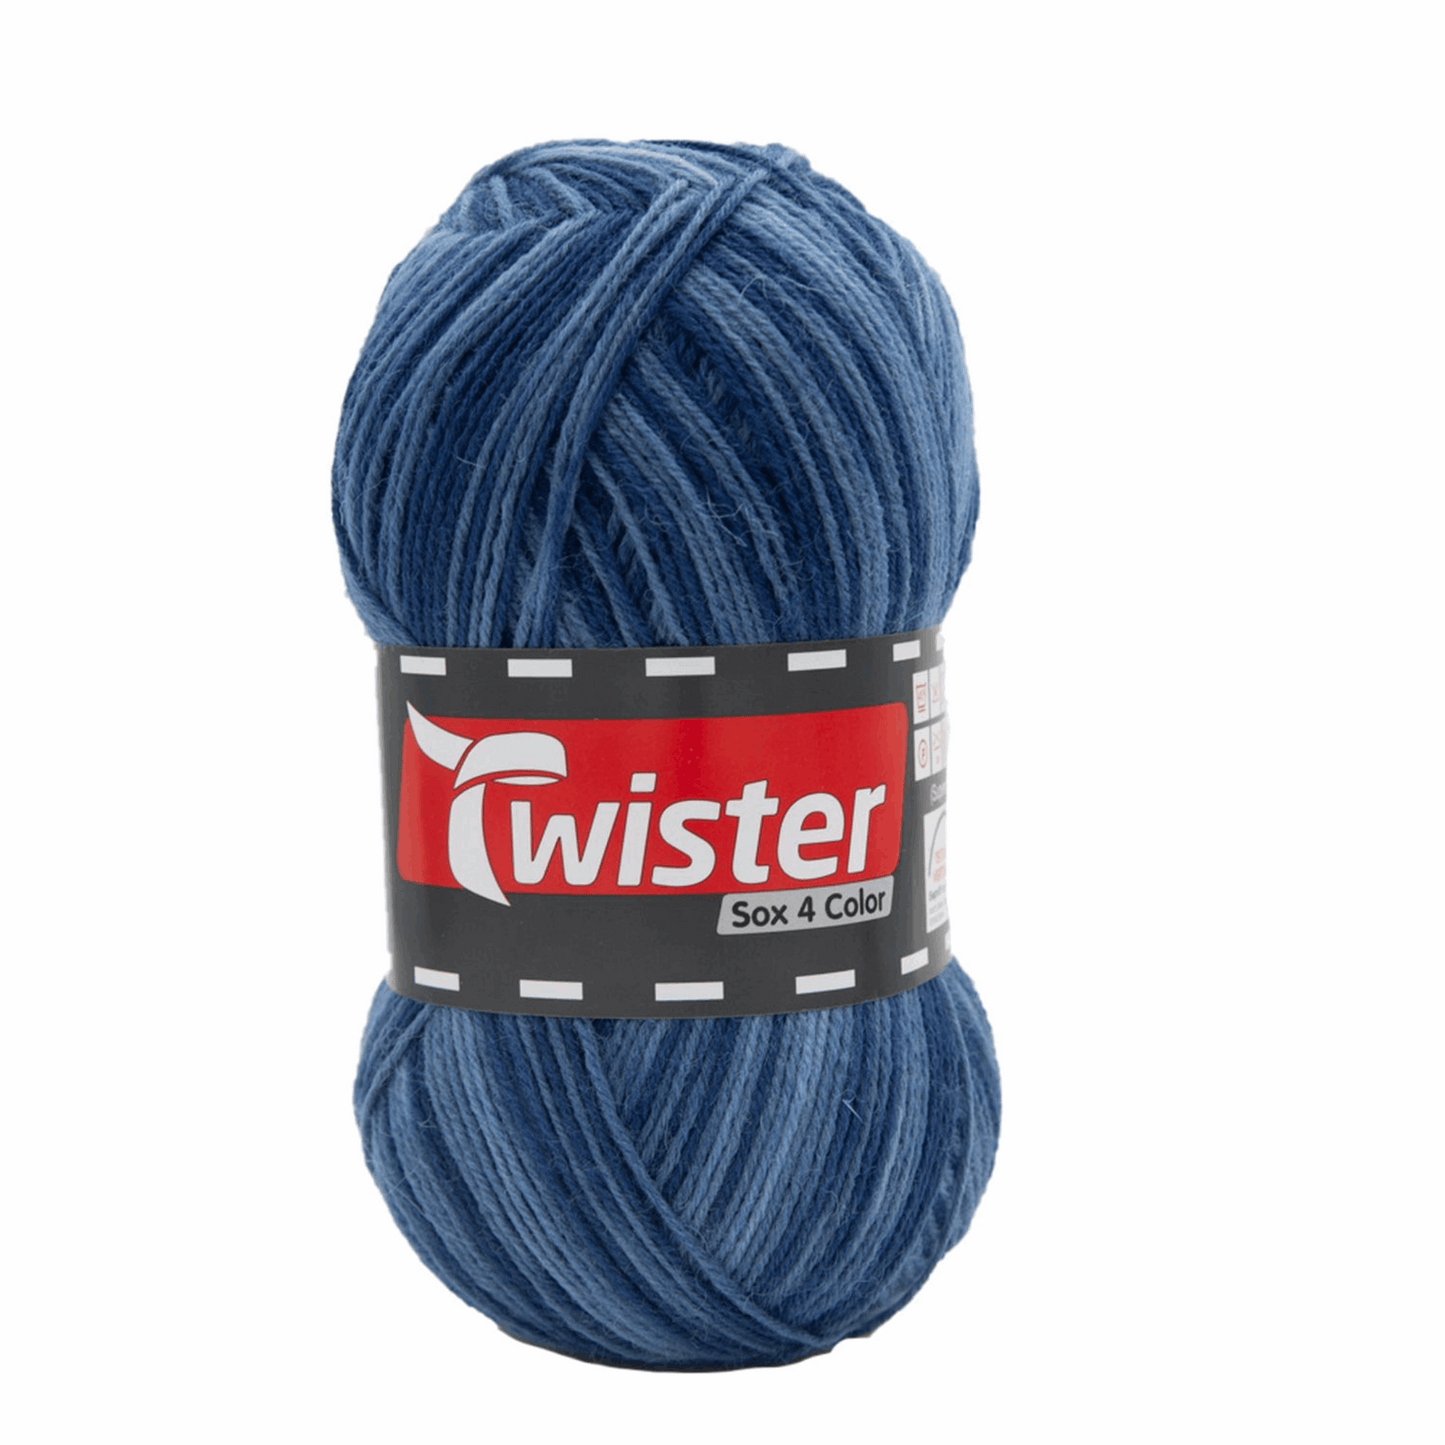 Twister Sox4 Color superwash, demin jeans multi, 98306, color 158